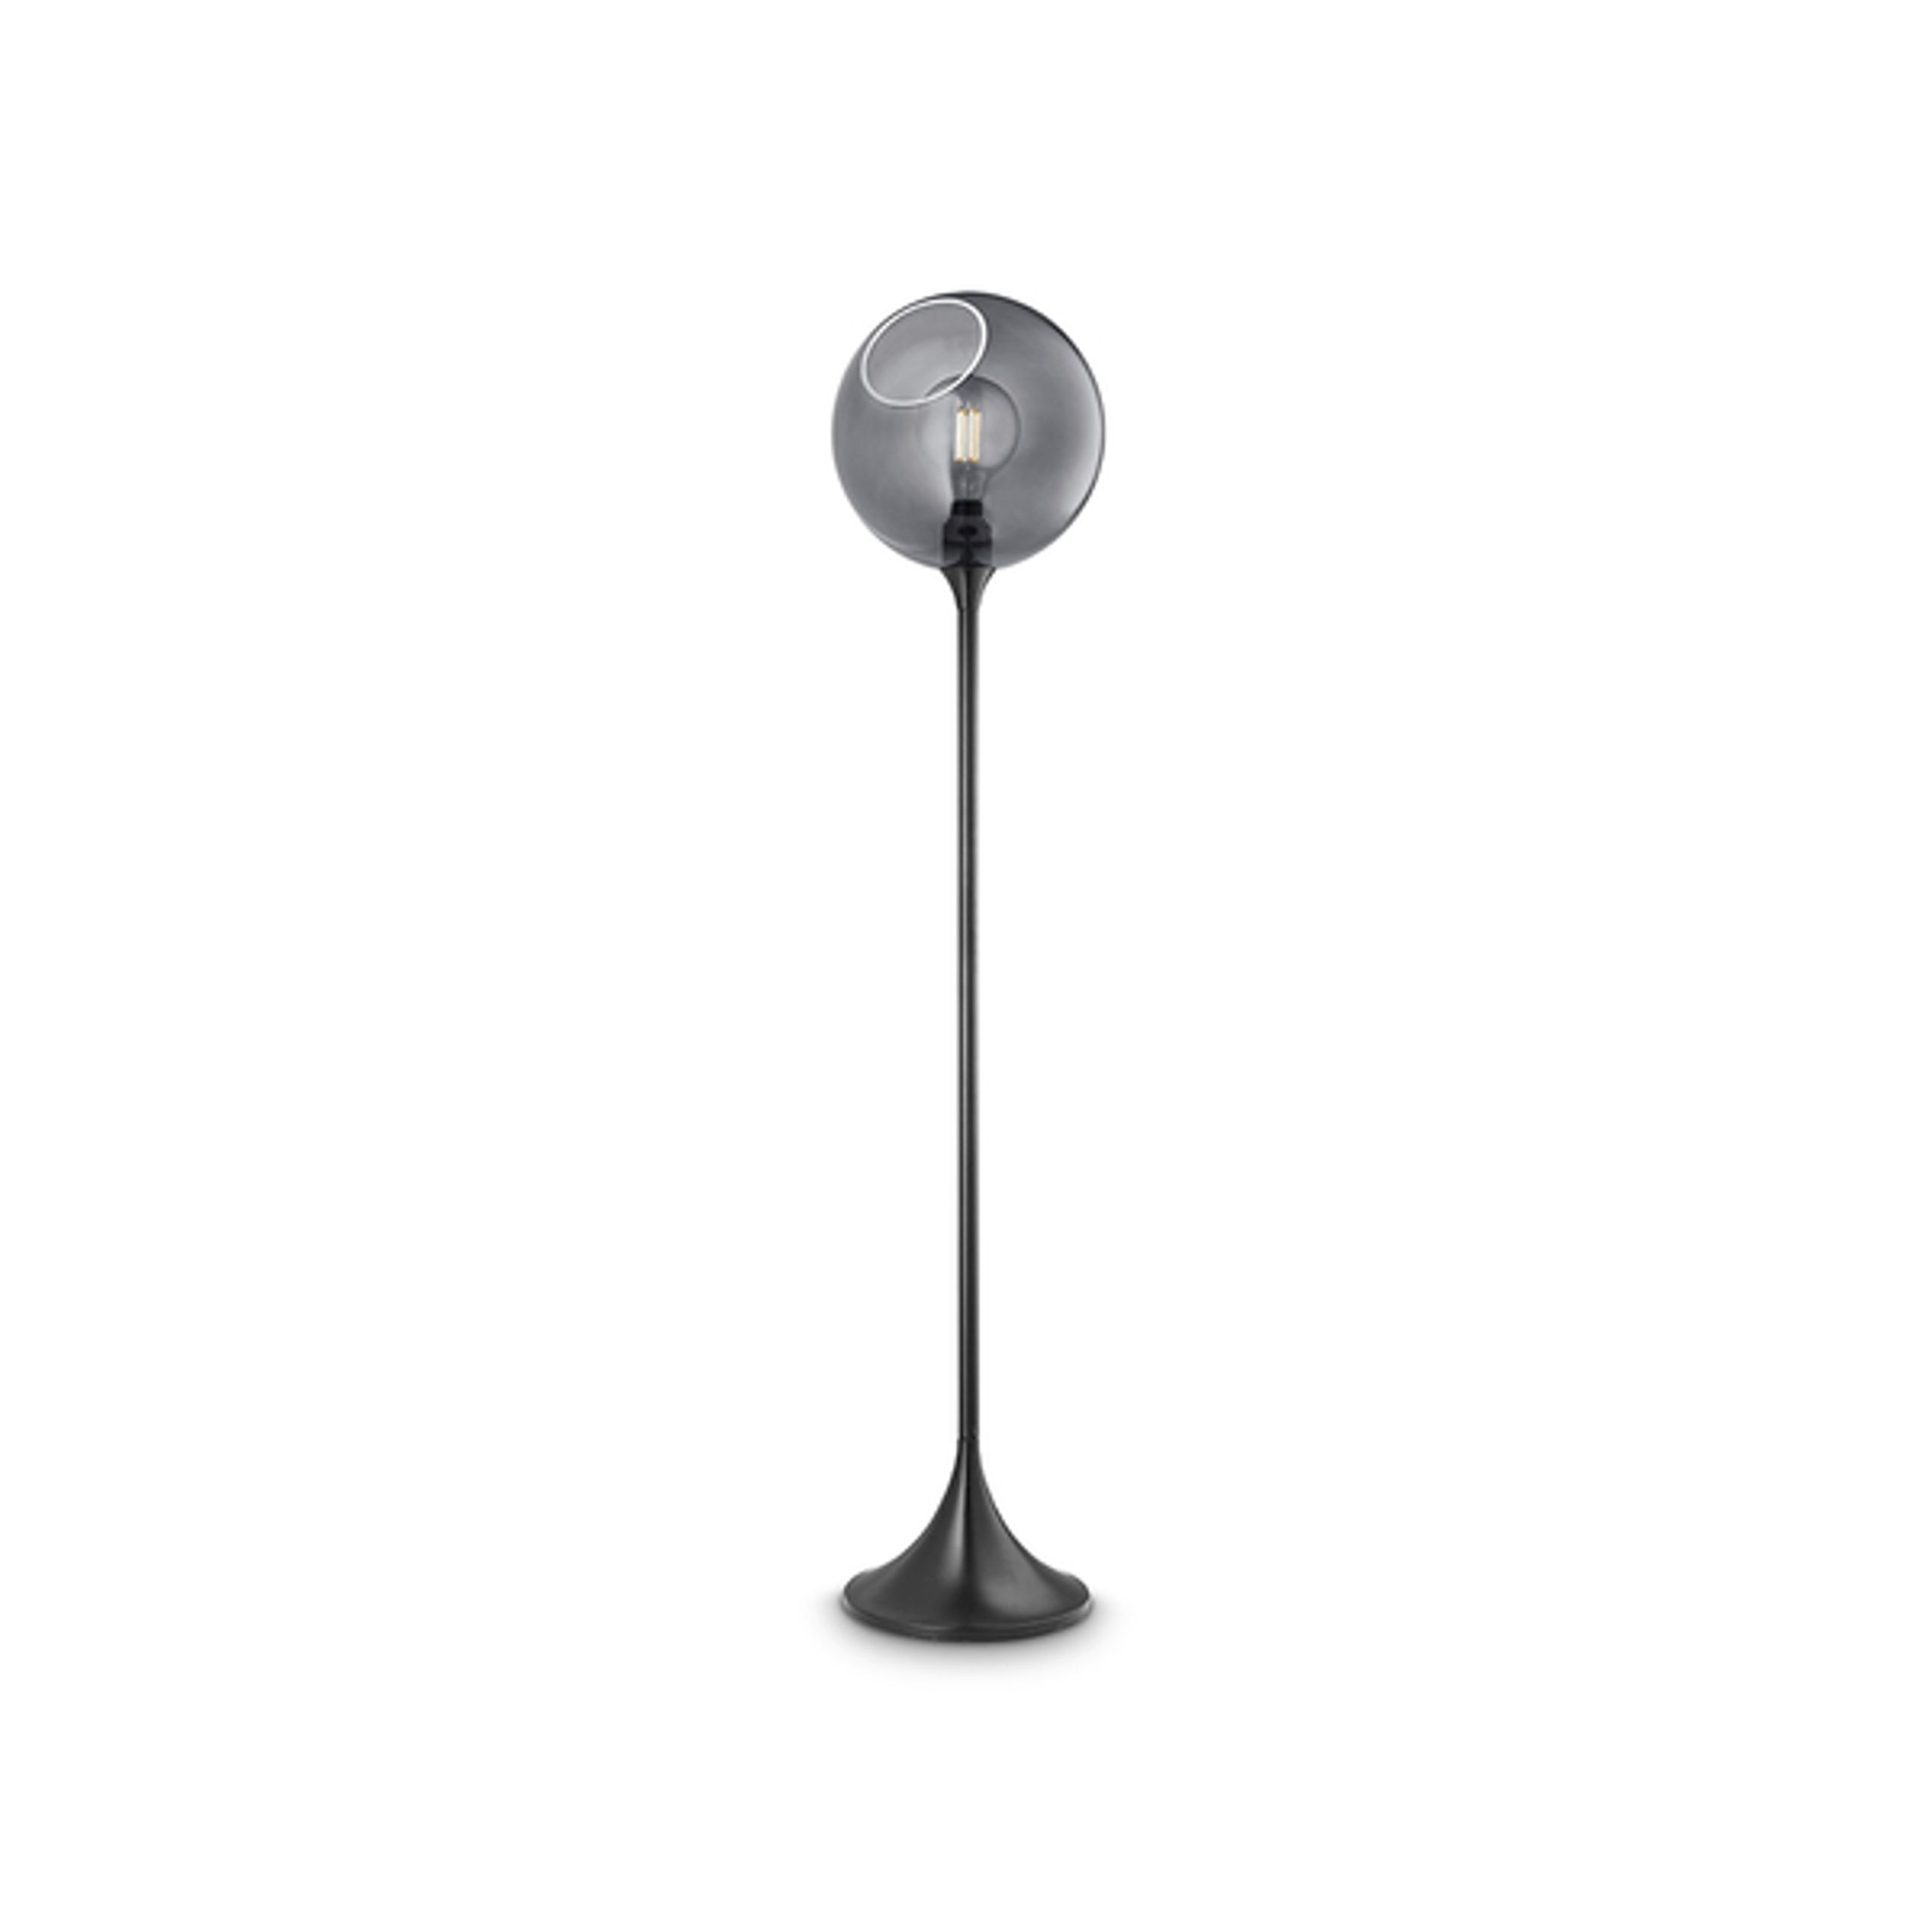 Design By Us - Stehlampe - Ballroom Floor Lamp - Smoke/Silver